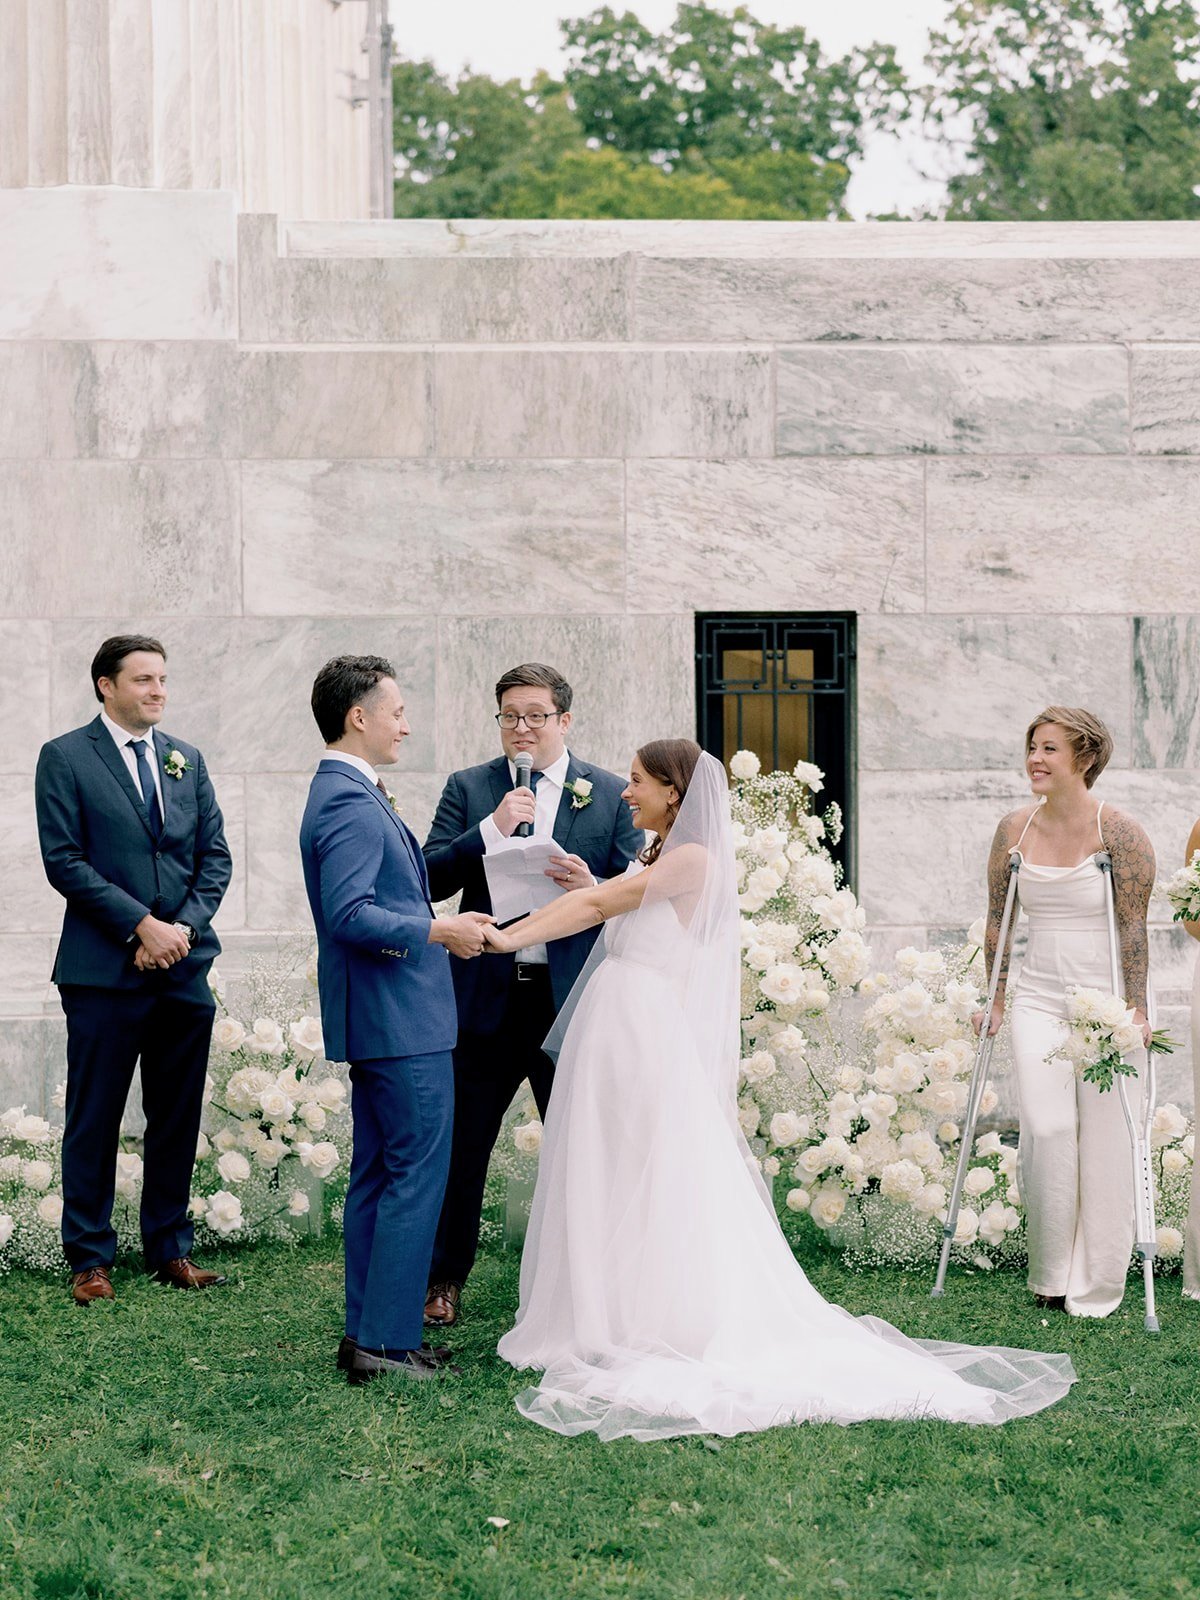 Best-Austin-Wedding-Photographers-Elopement-Film-35mm-Asheville-Santa-Barbara-1030.jpg